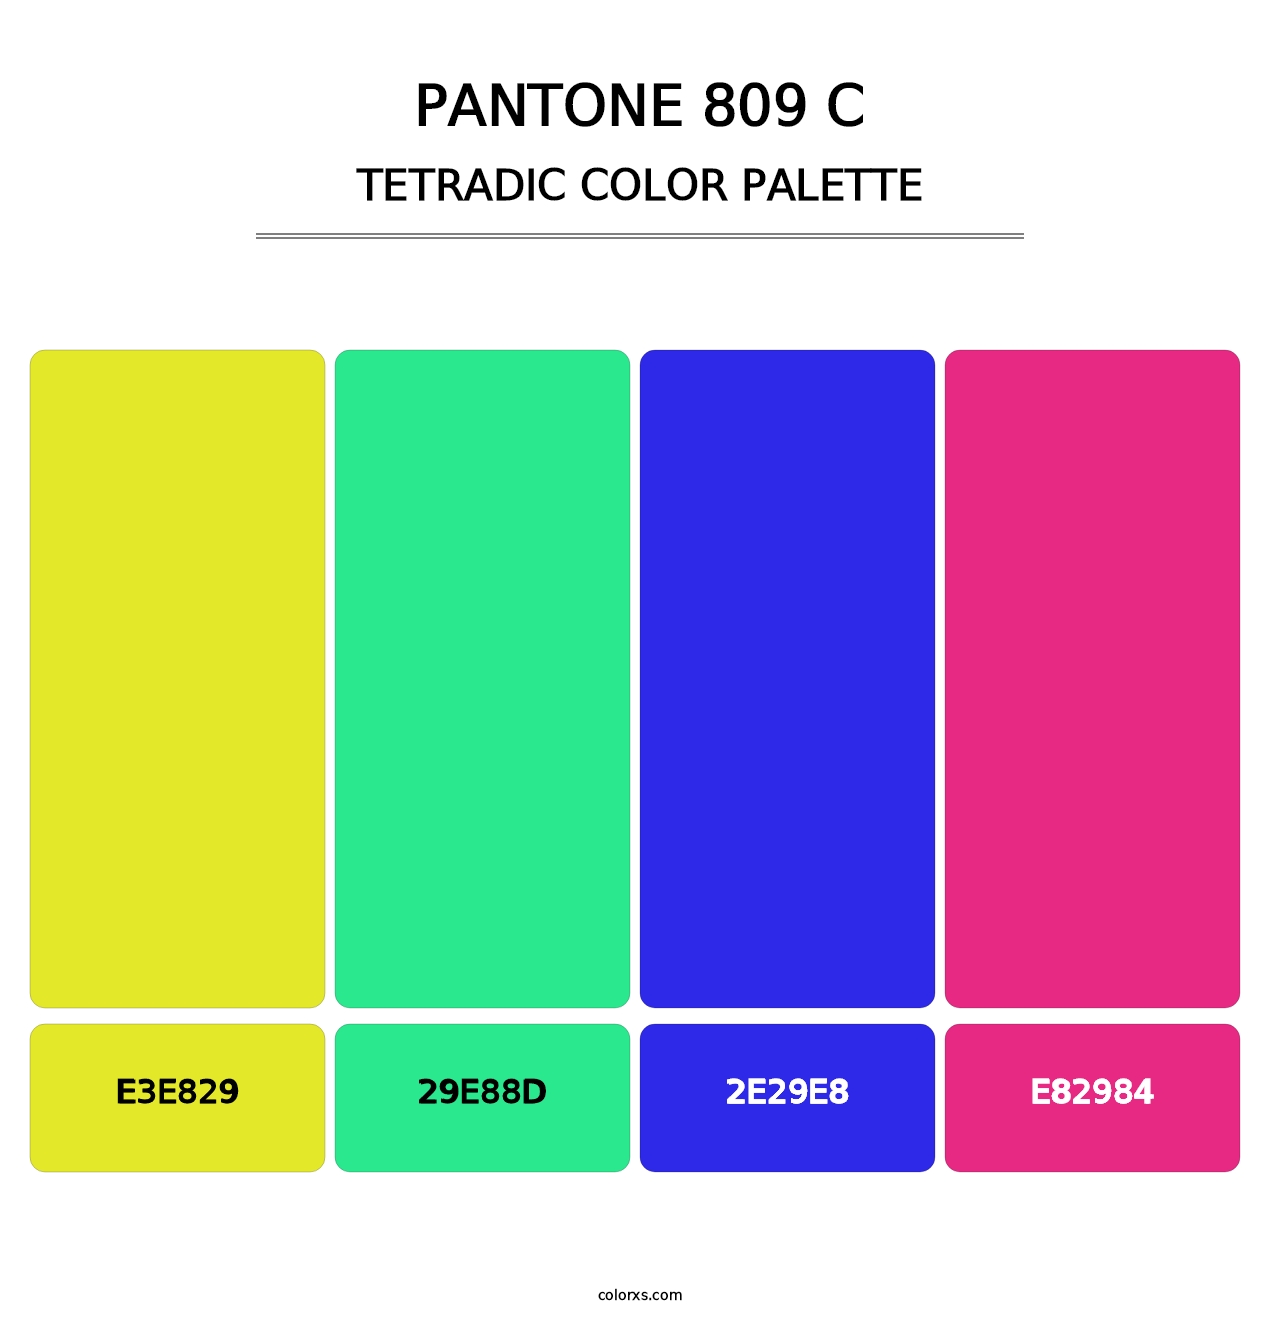 PANTONE 809 C - Tetradic Color Palette